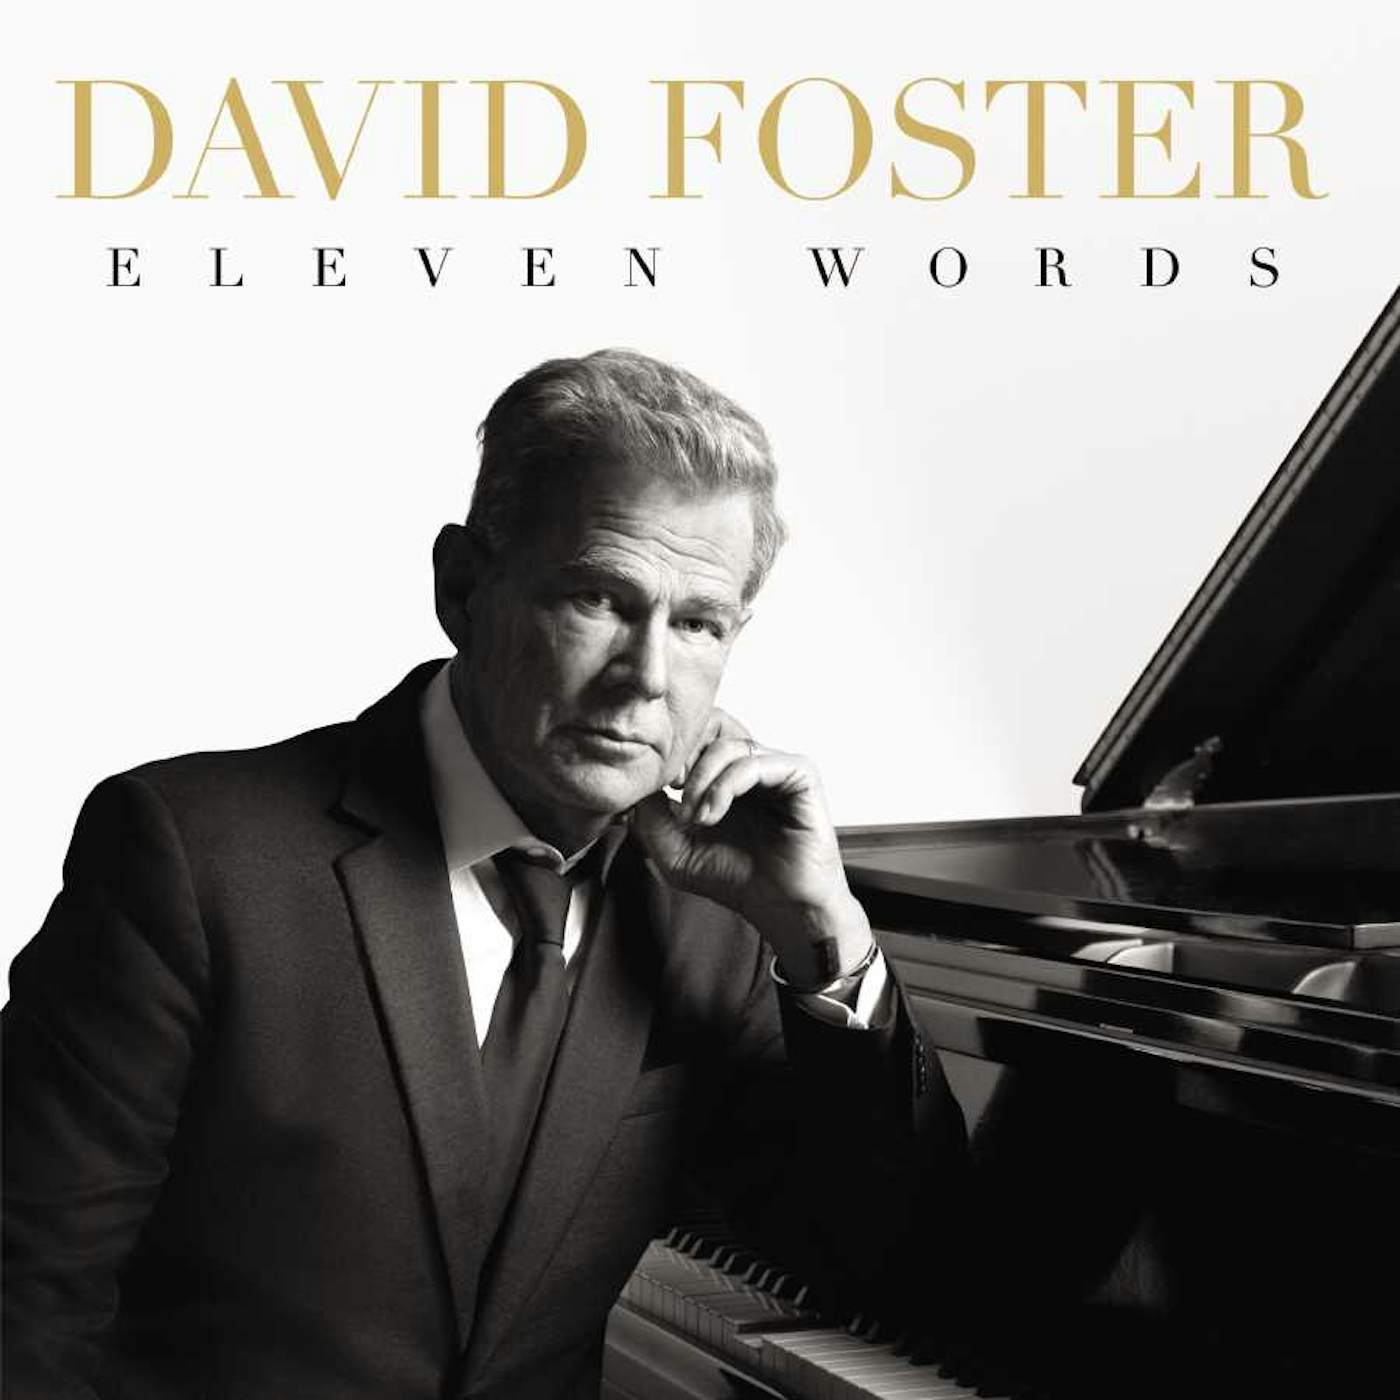 David Foster ELEVEN WORDS CD